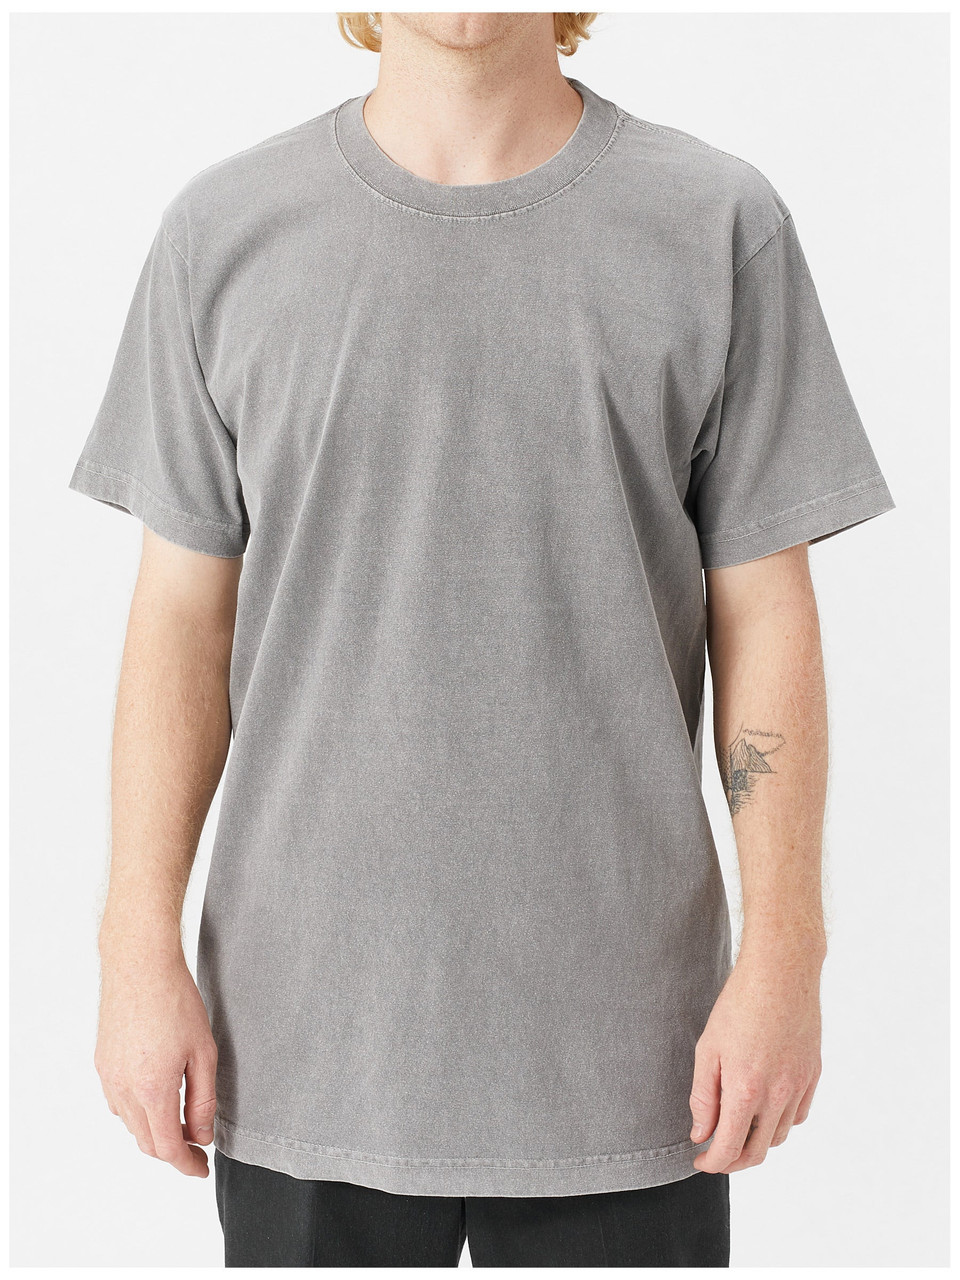 Shaka Wear Blank 7.5 oz Heavyweight Garment Dye T-Shirt